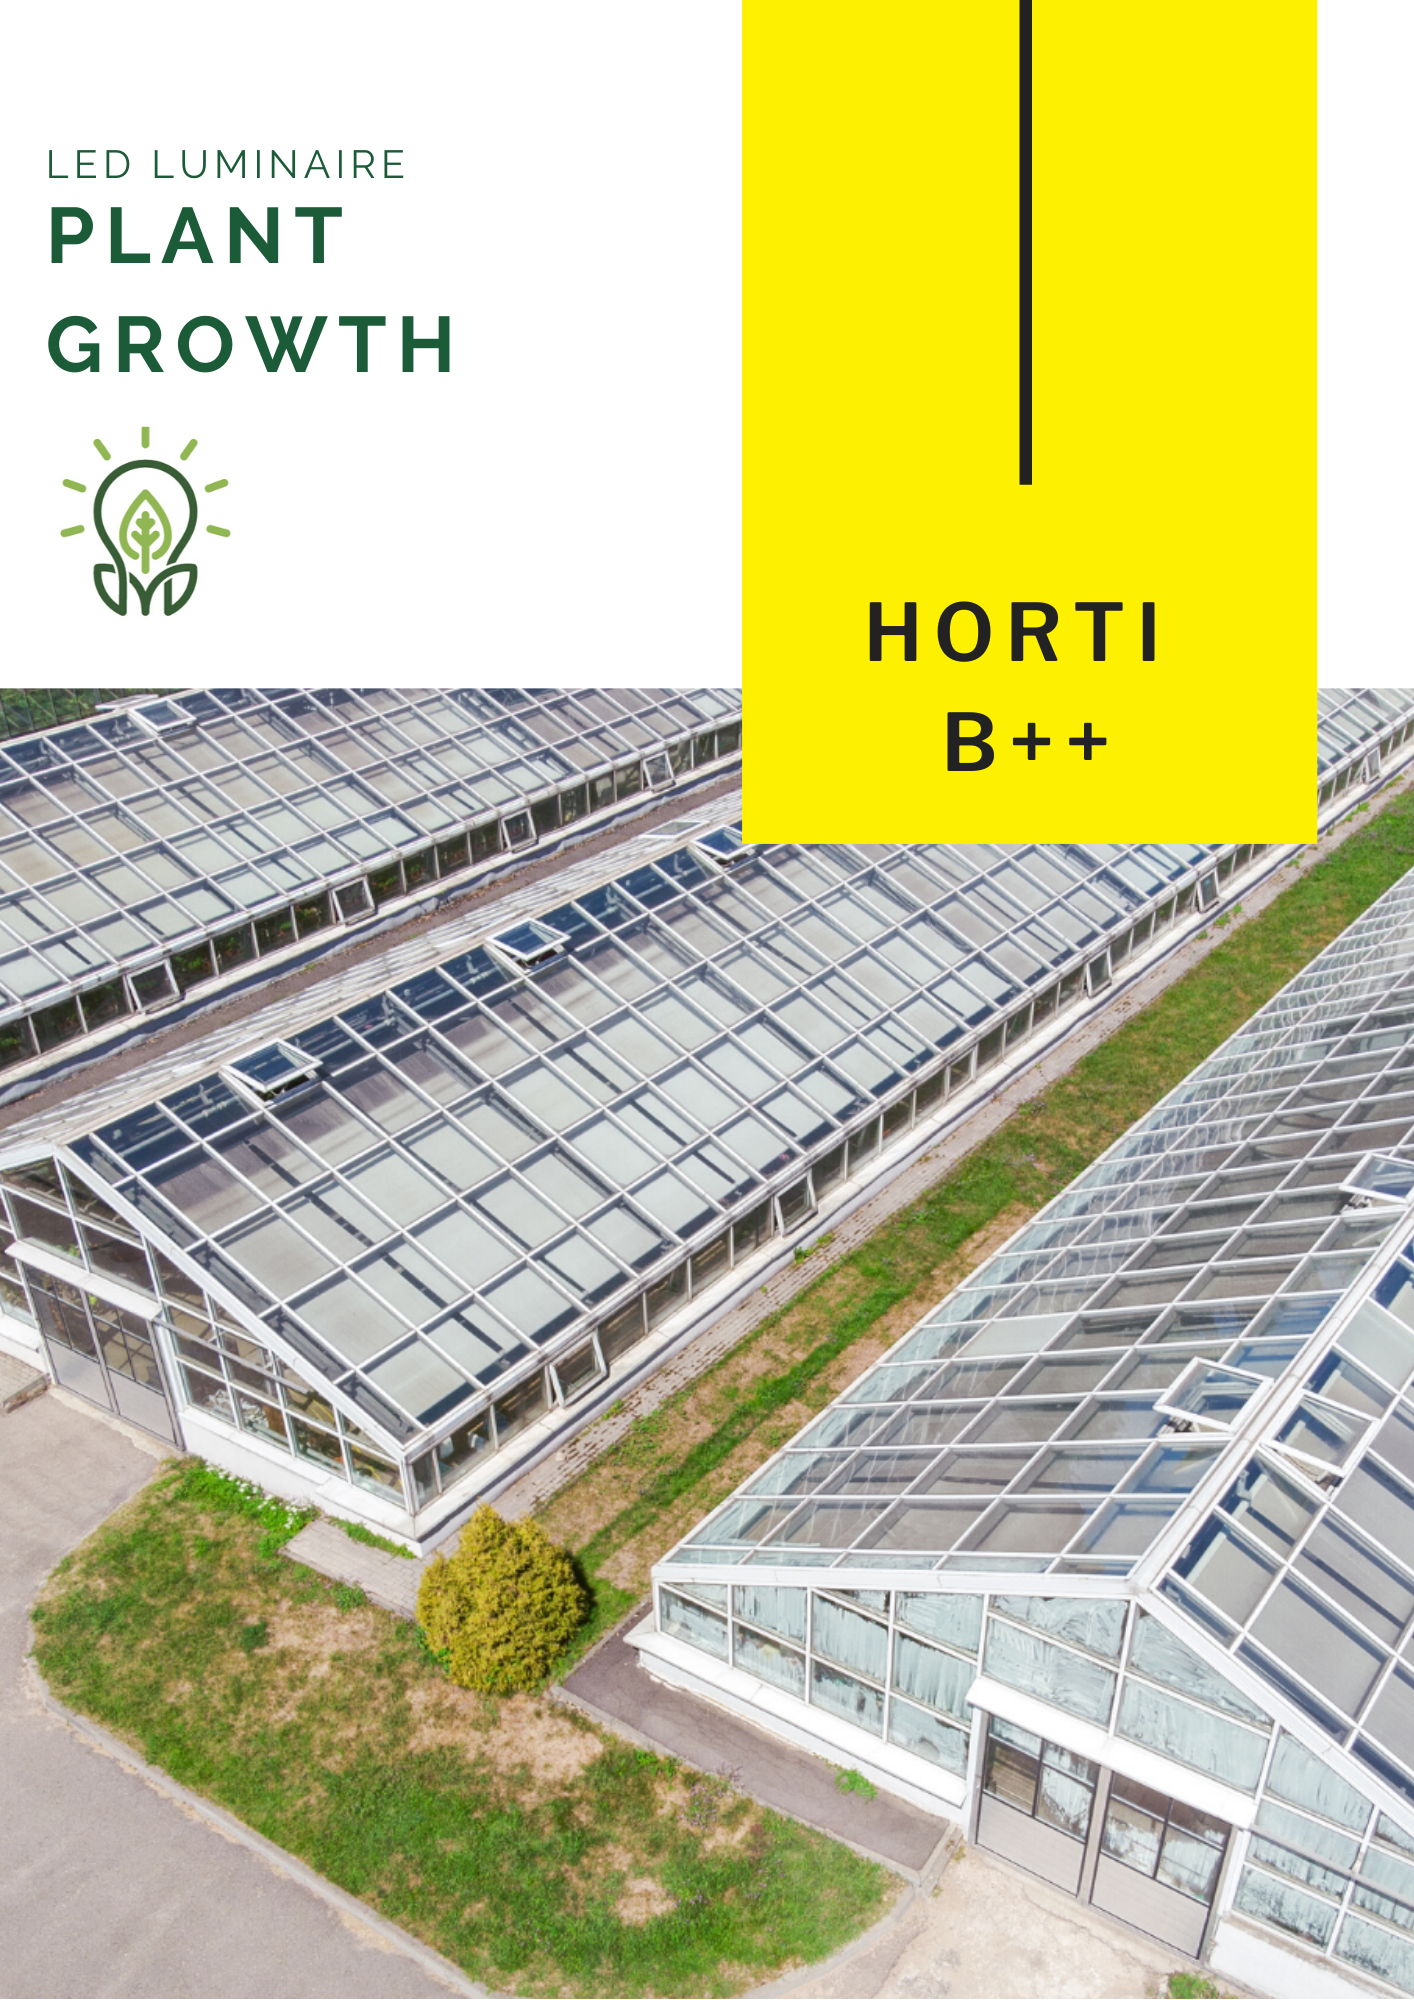 Horti B++ plant growth LED luminaire